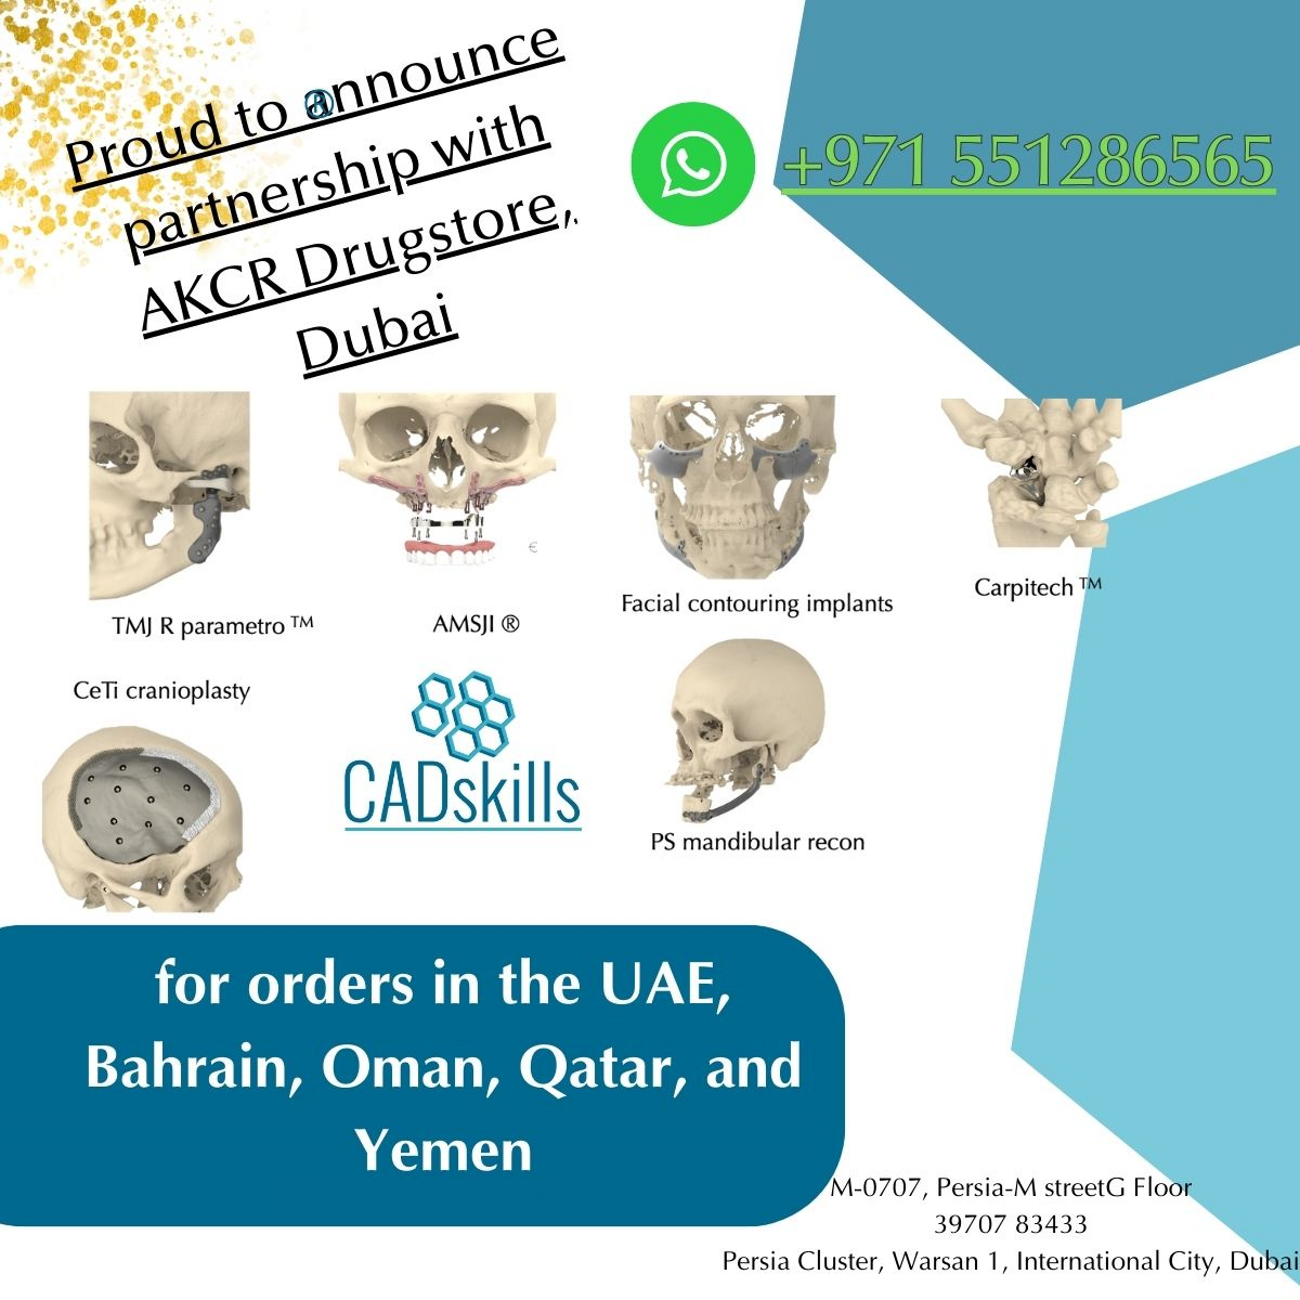 Distributor in Bahrain, Oman, Qatar, Yemen, UAE - AKCR Drug Store Dubai - Dr. Chungath